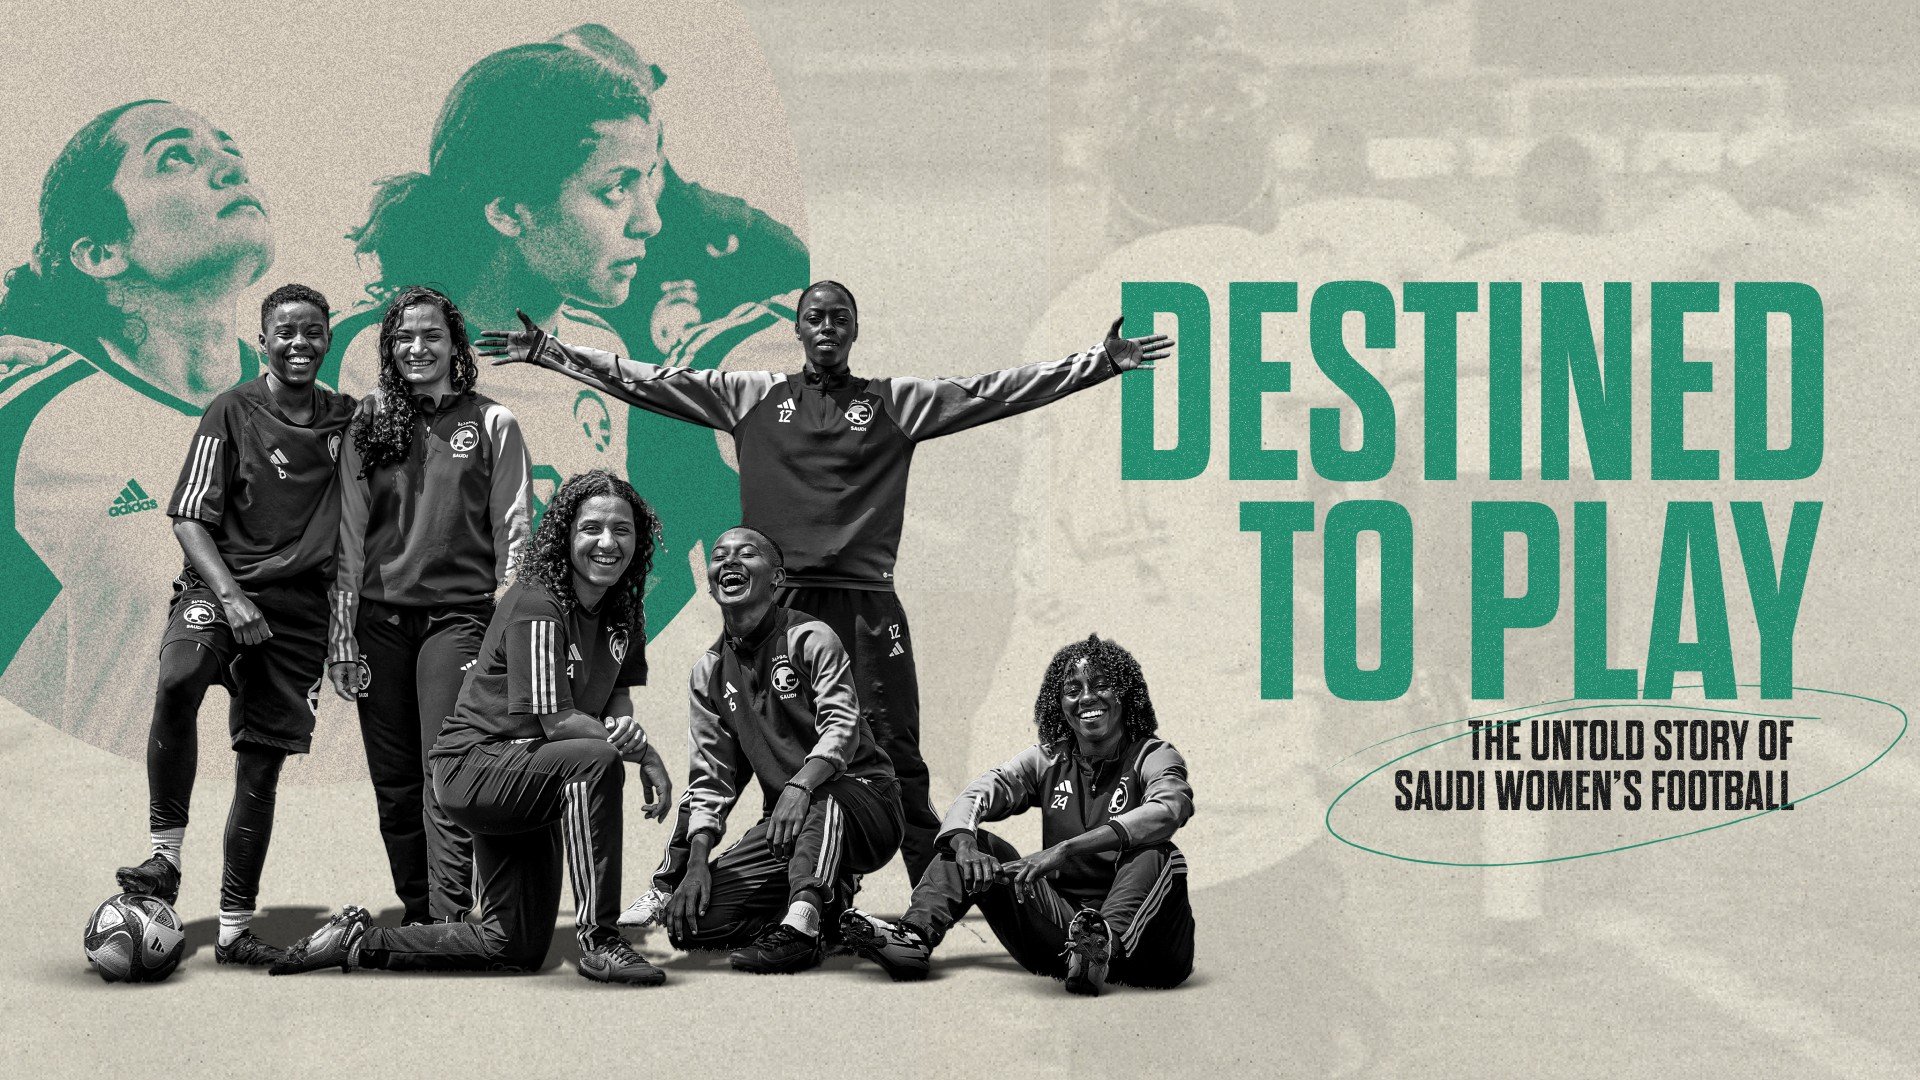 Feature-length Footballco film tells the inspiring story of Saudi Arabian Women’s Football